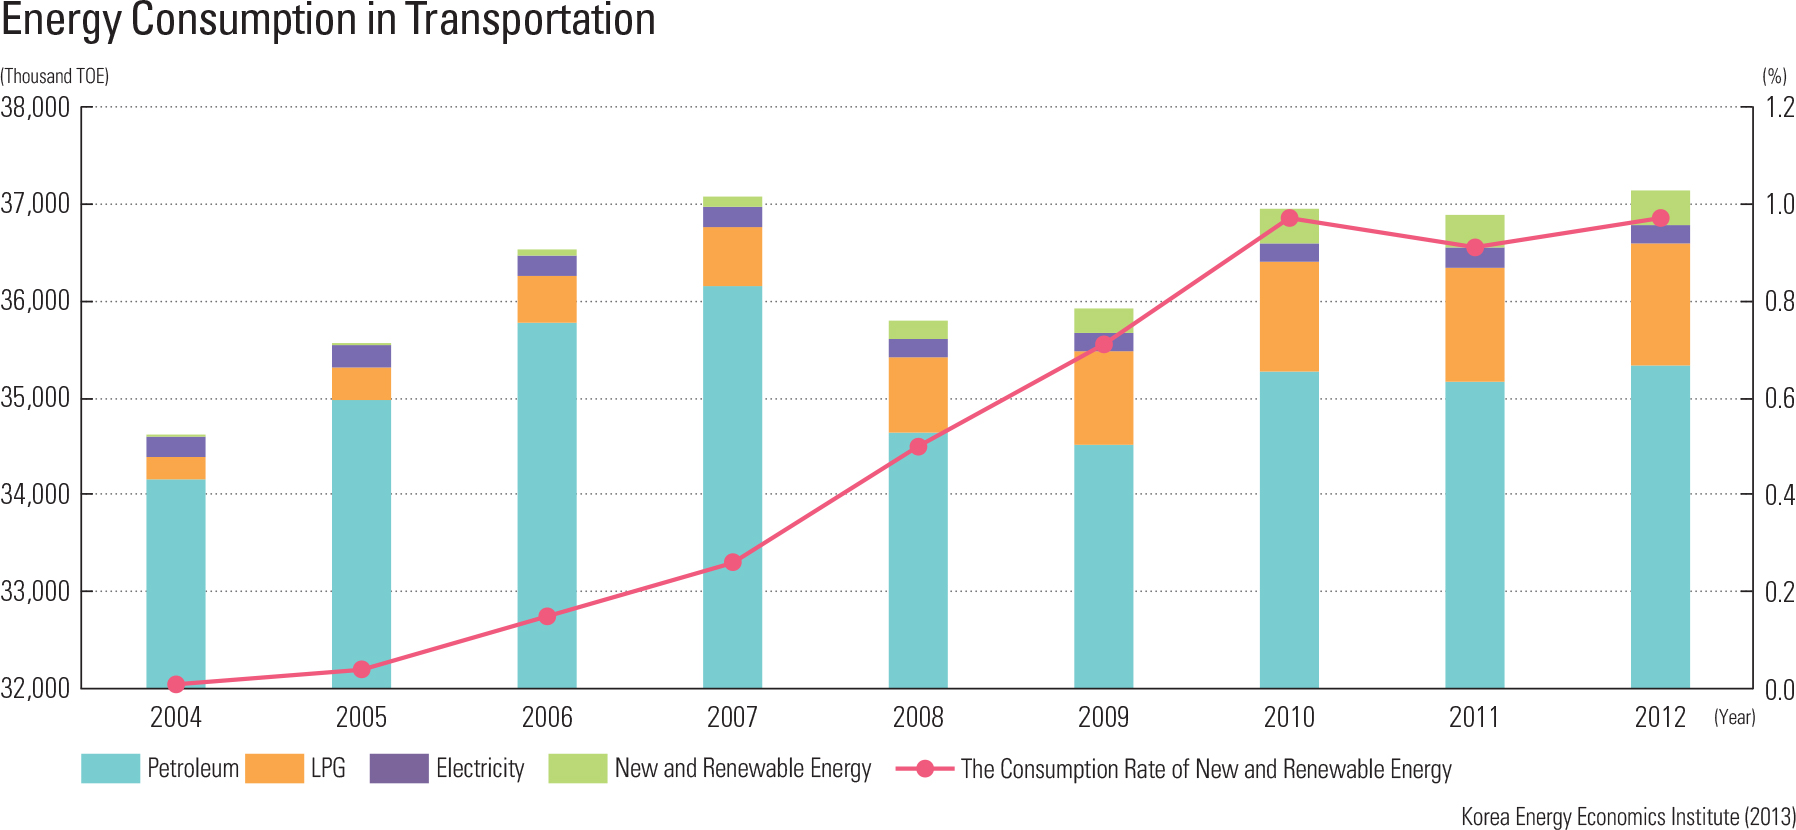  Energy Consumption in Transportation